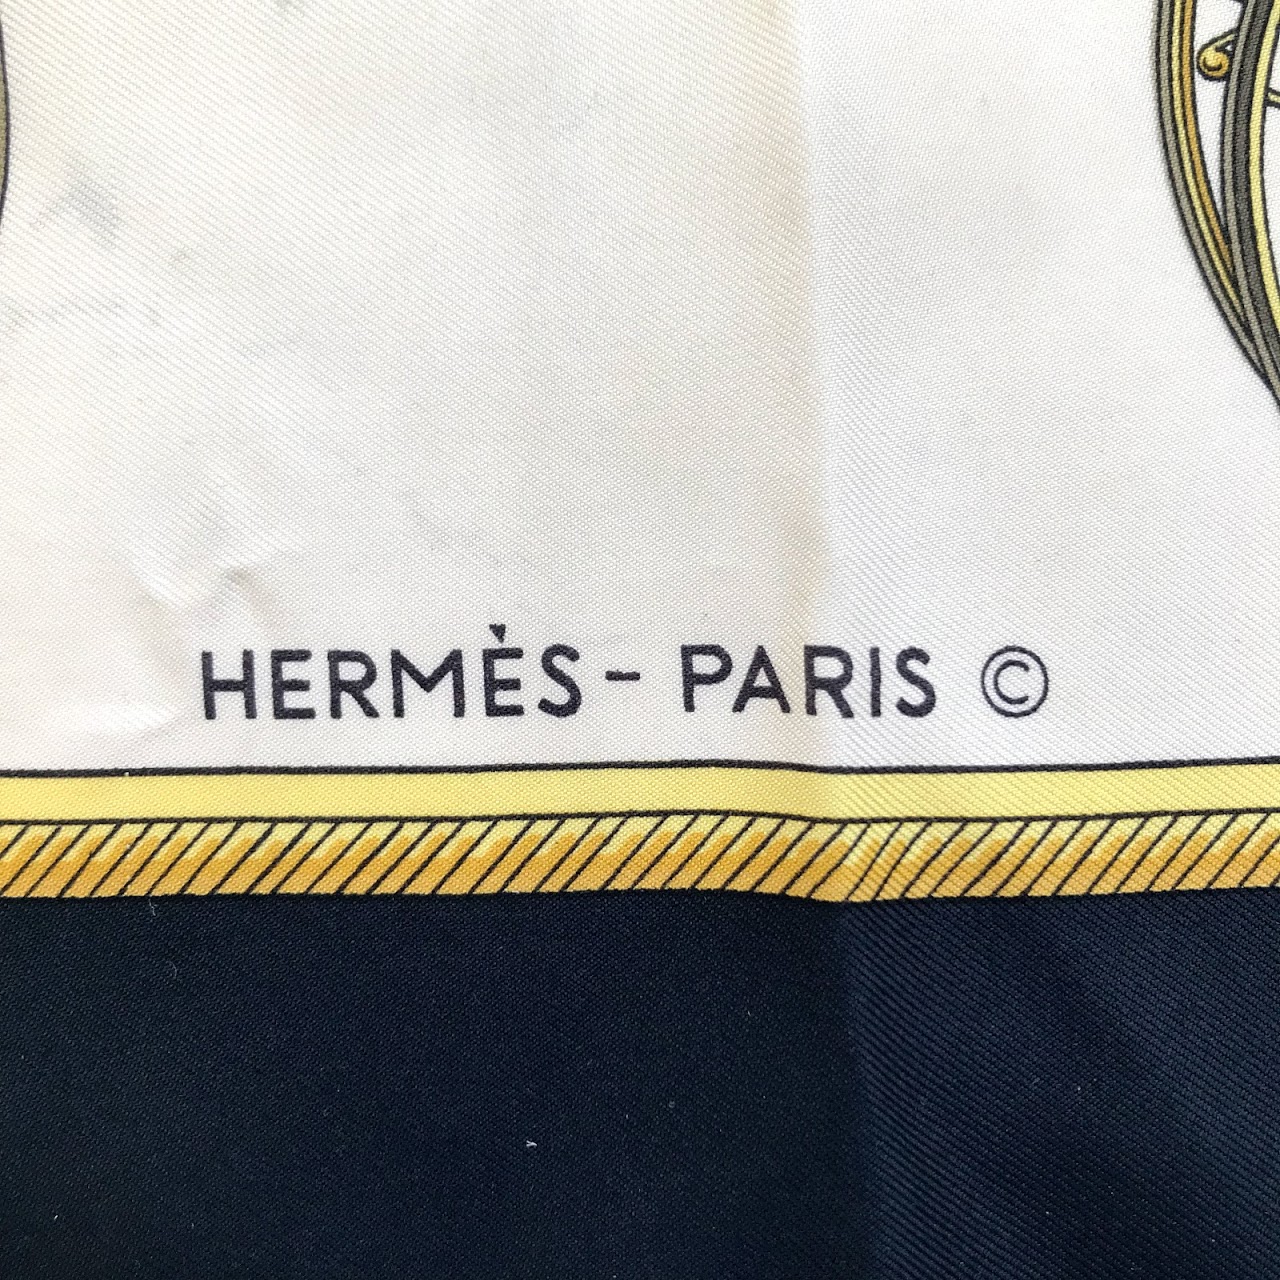 Hermès 'Les Voitures a Transformation' Silk Scarf 90